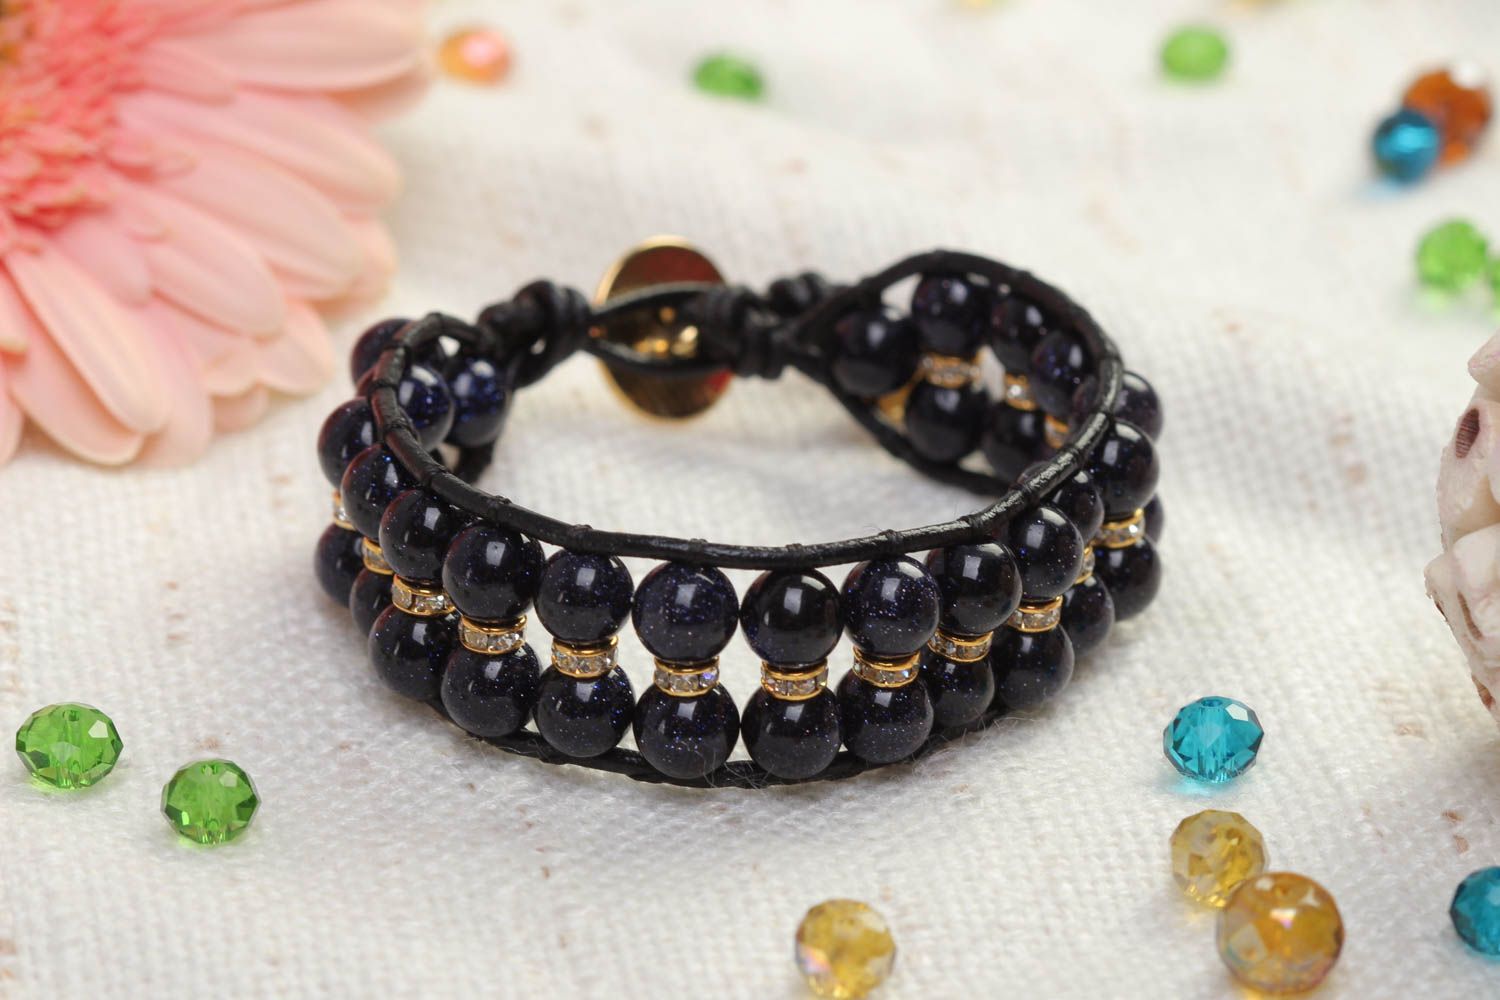 Beautiful handmade wrist bracelet designs gemstone bead bracelet gifts for her photo 1